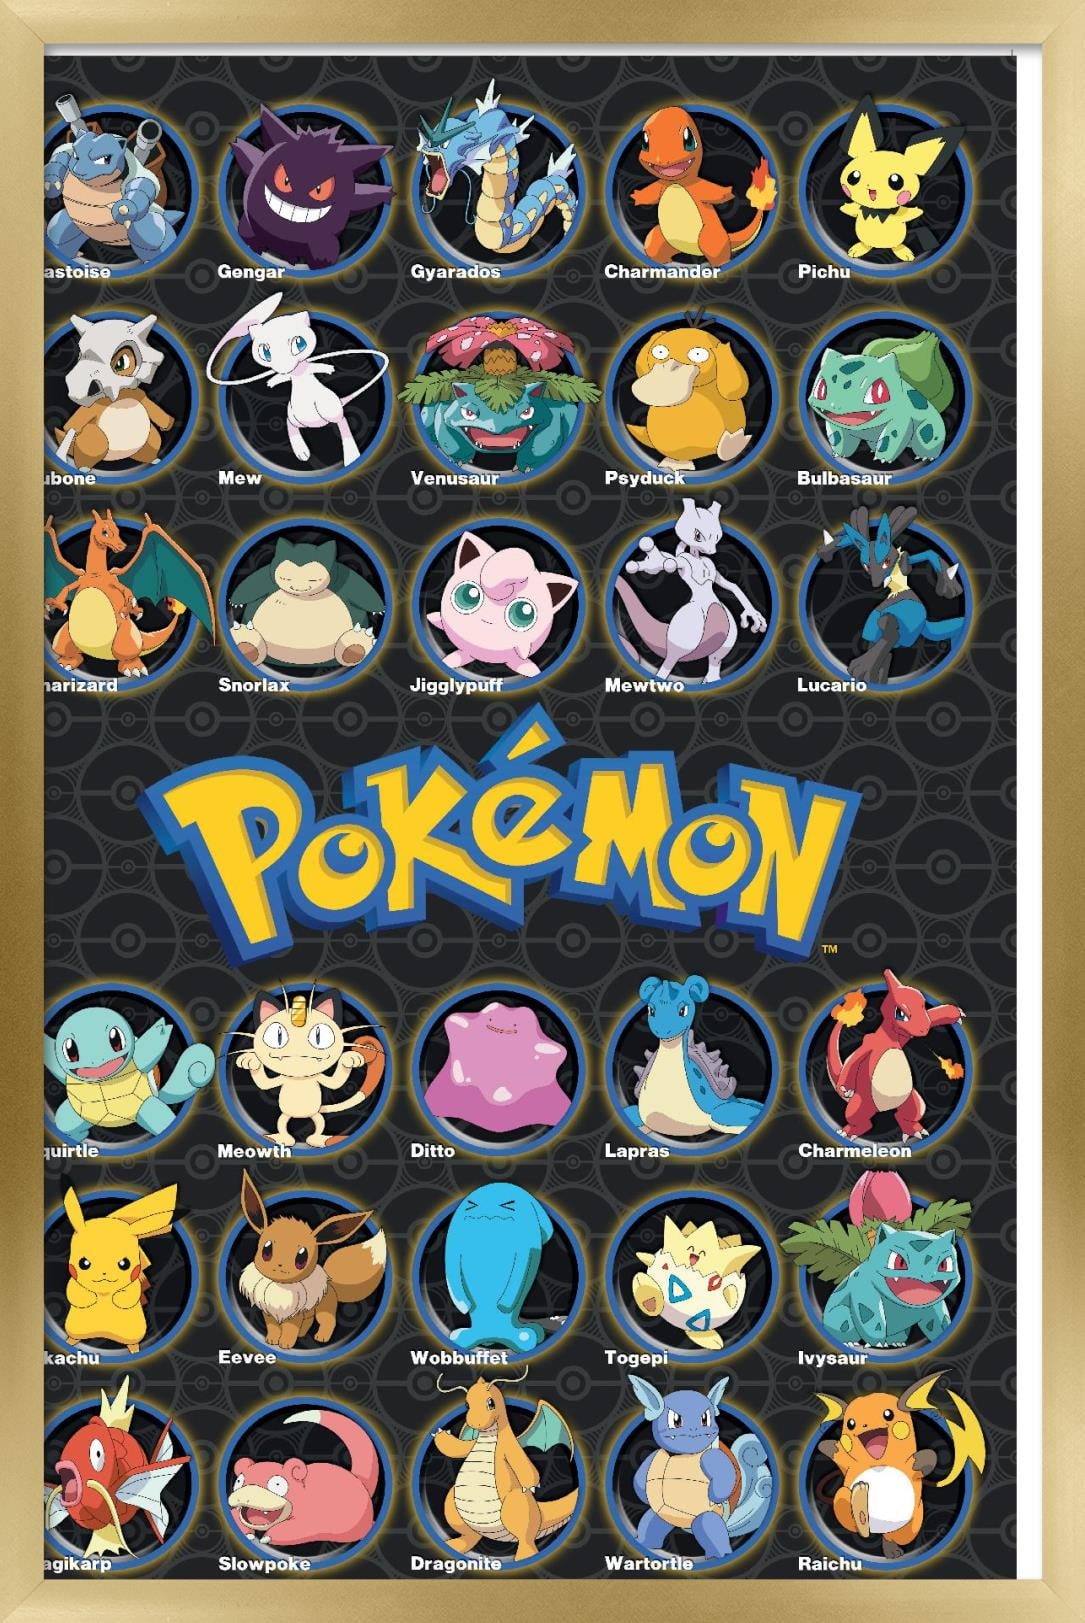 Pokémon - All Time Favorites Wall Poster, 22.375 x 34 